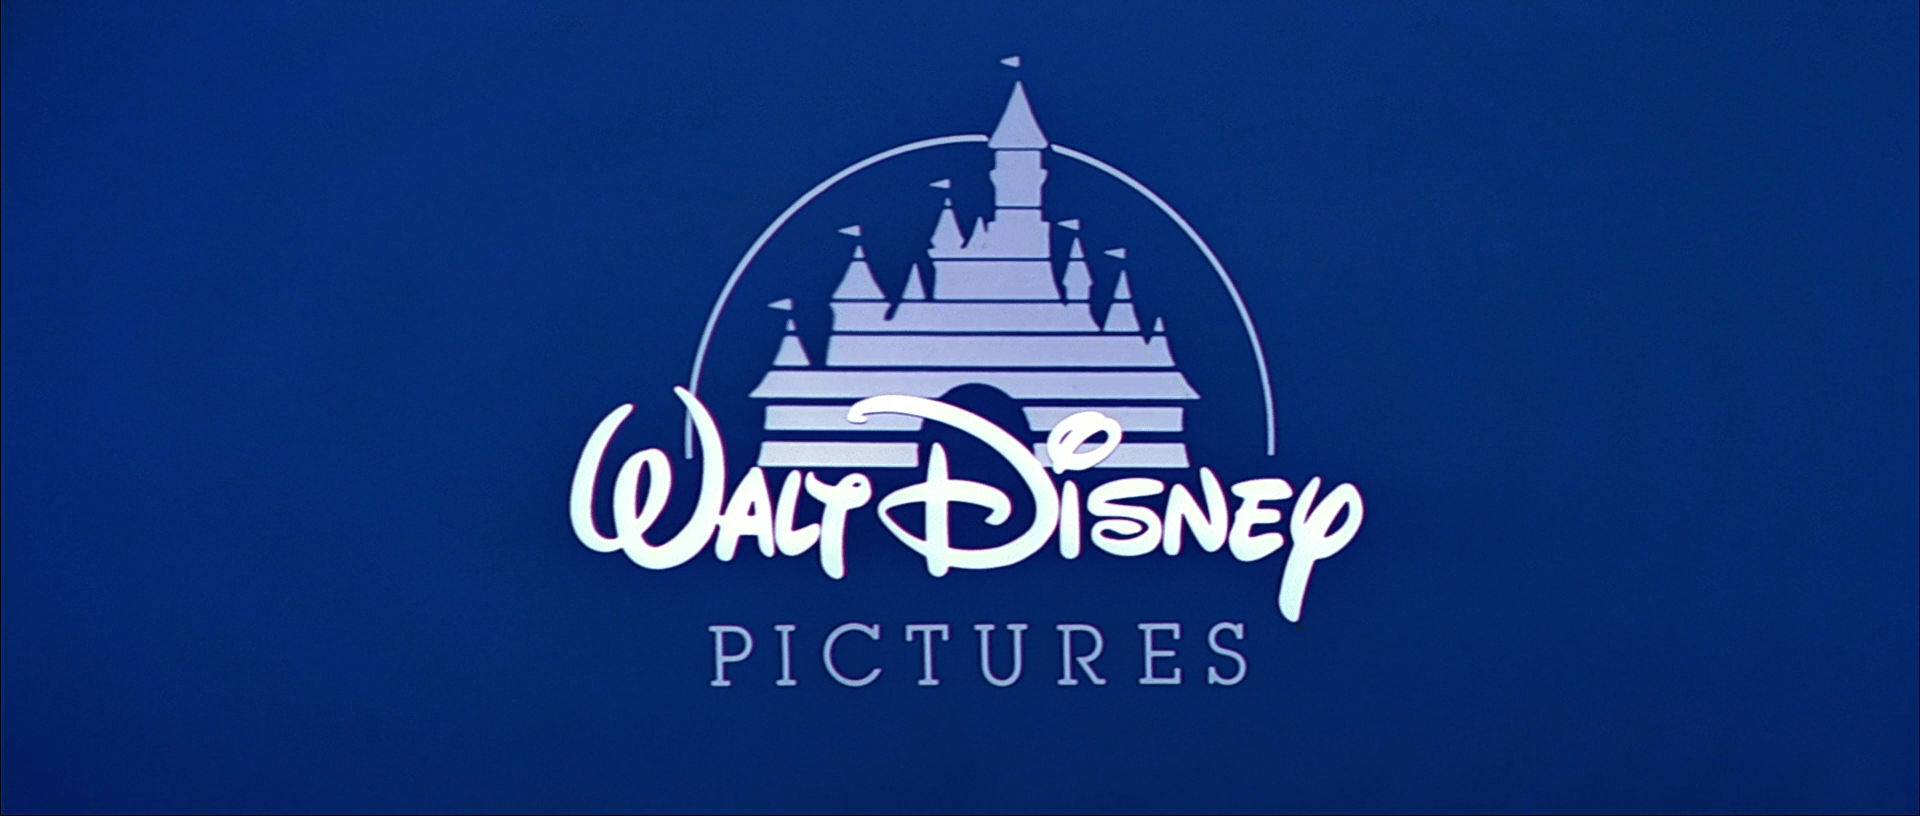 Walt Disney Pictures Presents Logo - Walt Disney Pictures/Closing Variants | Logopedia | FANDOM ...